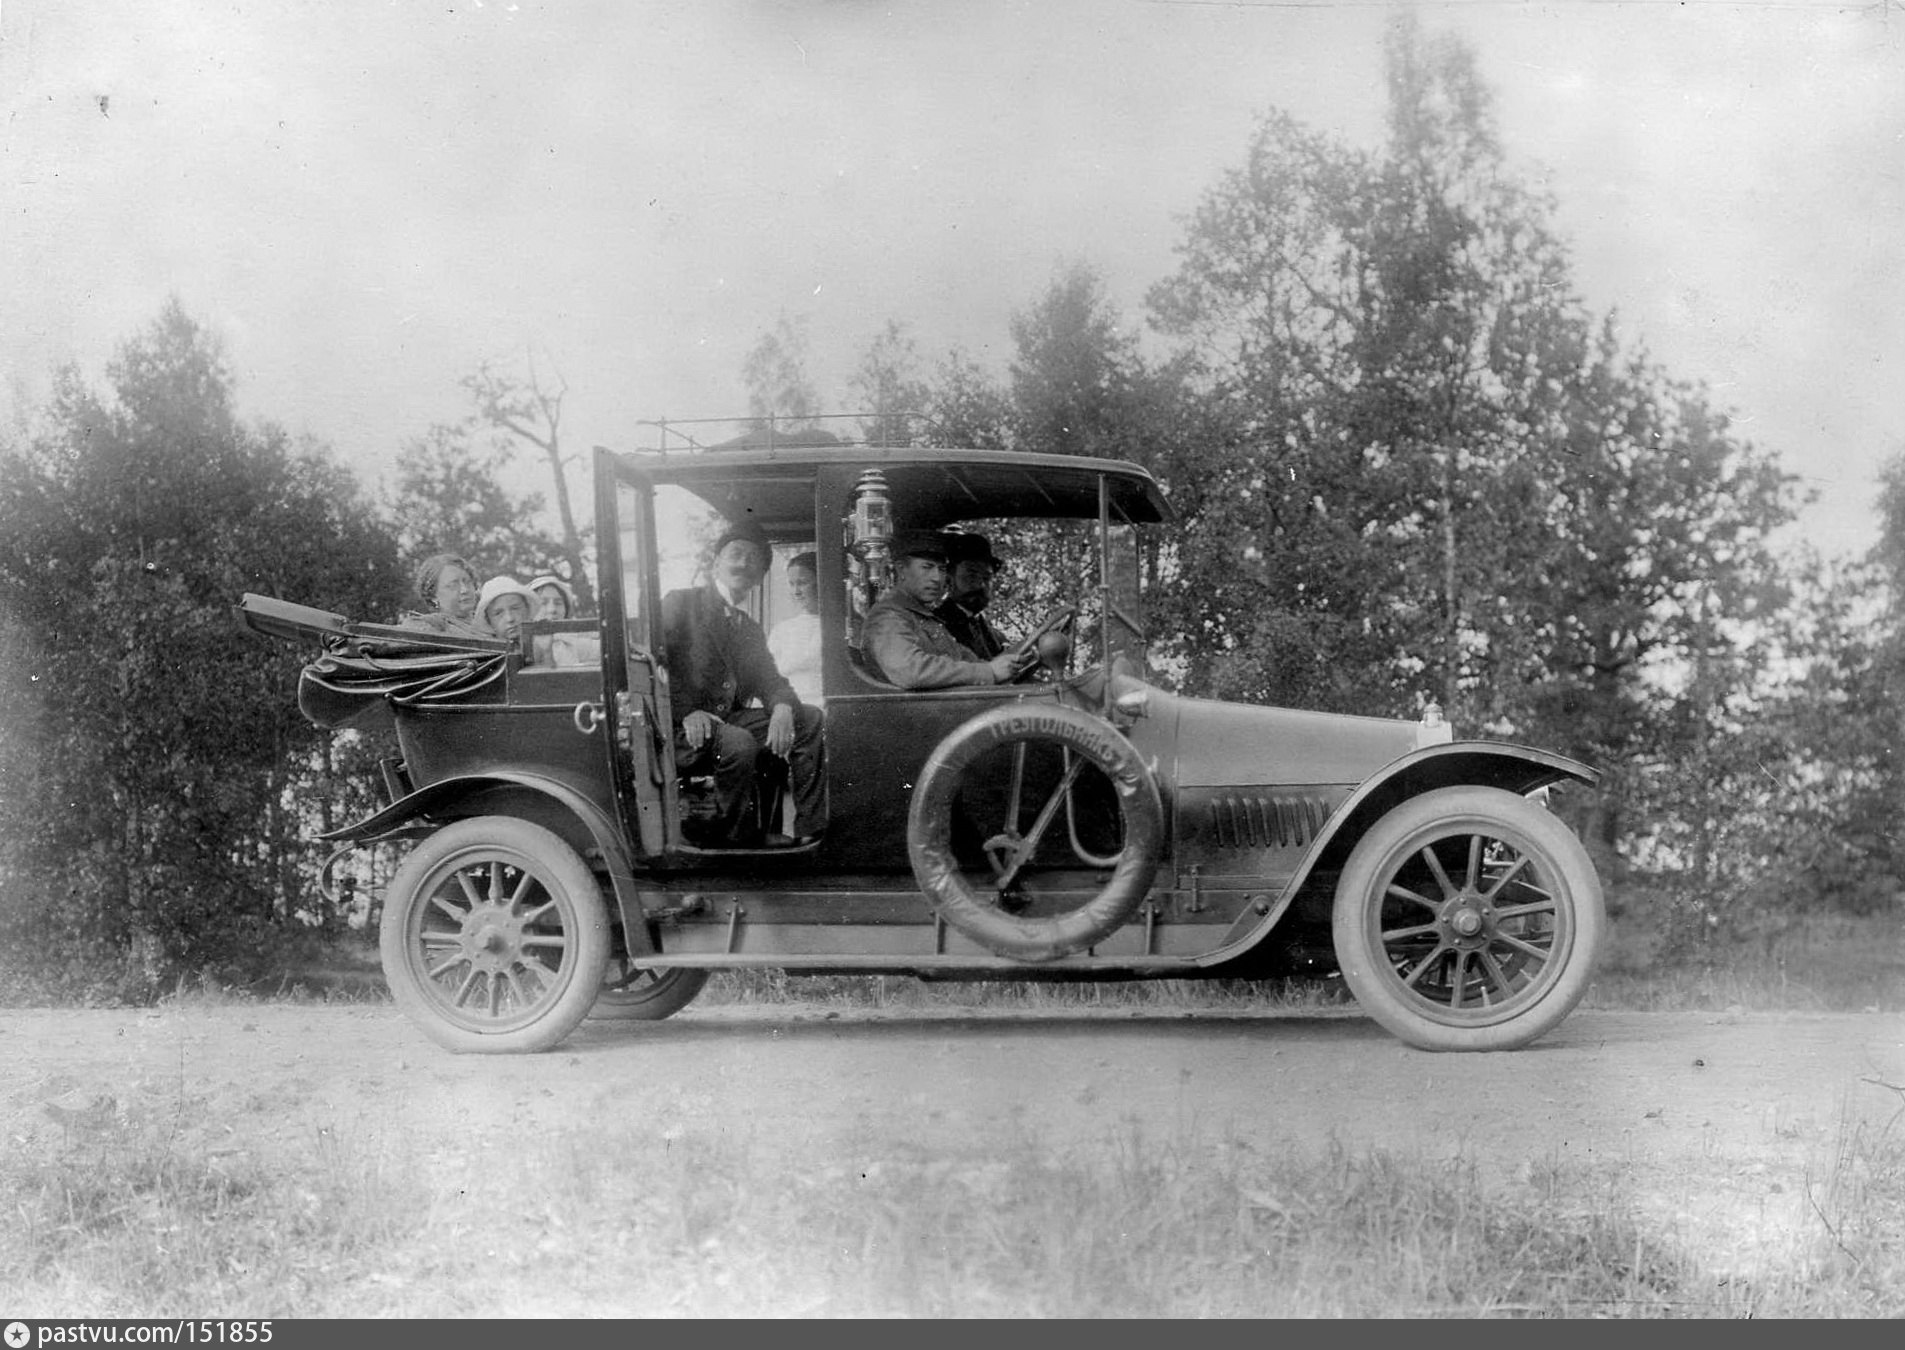 Автомобиль балт. Автомобиль 1913 Руссо Балт. Автомобиль Руссо-Балт 1911 г. Бронеавтомобиль Руссо-Балт 1914. Руссо Балт с 24/40 Ландоле.